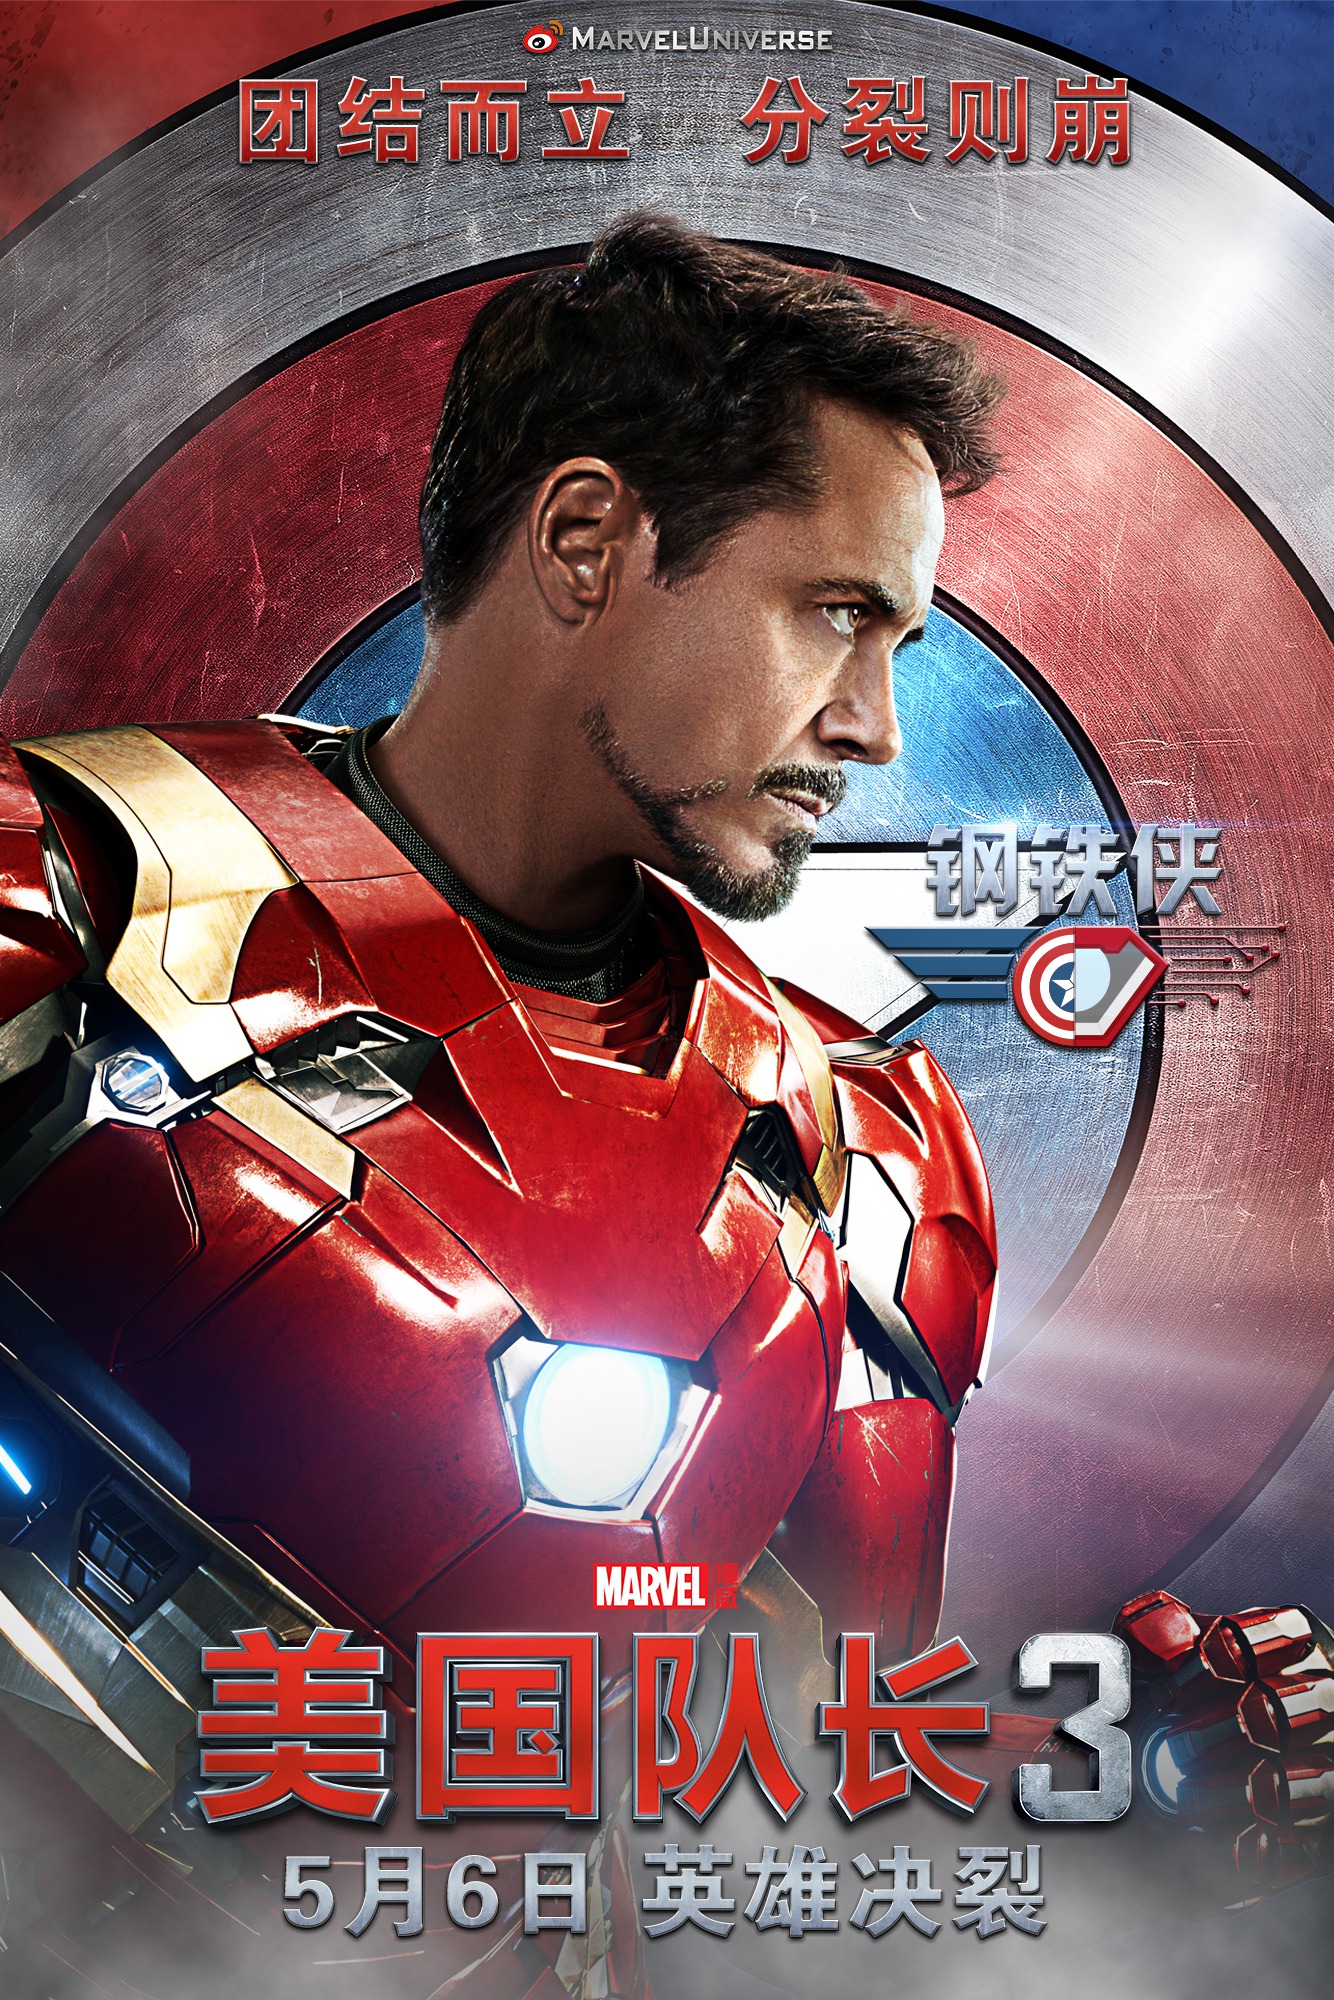 Mega Sized Movie Poster Image for Captain America: Civil War (#34 of 42)